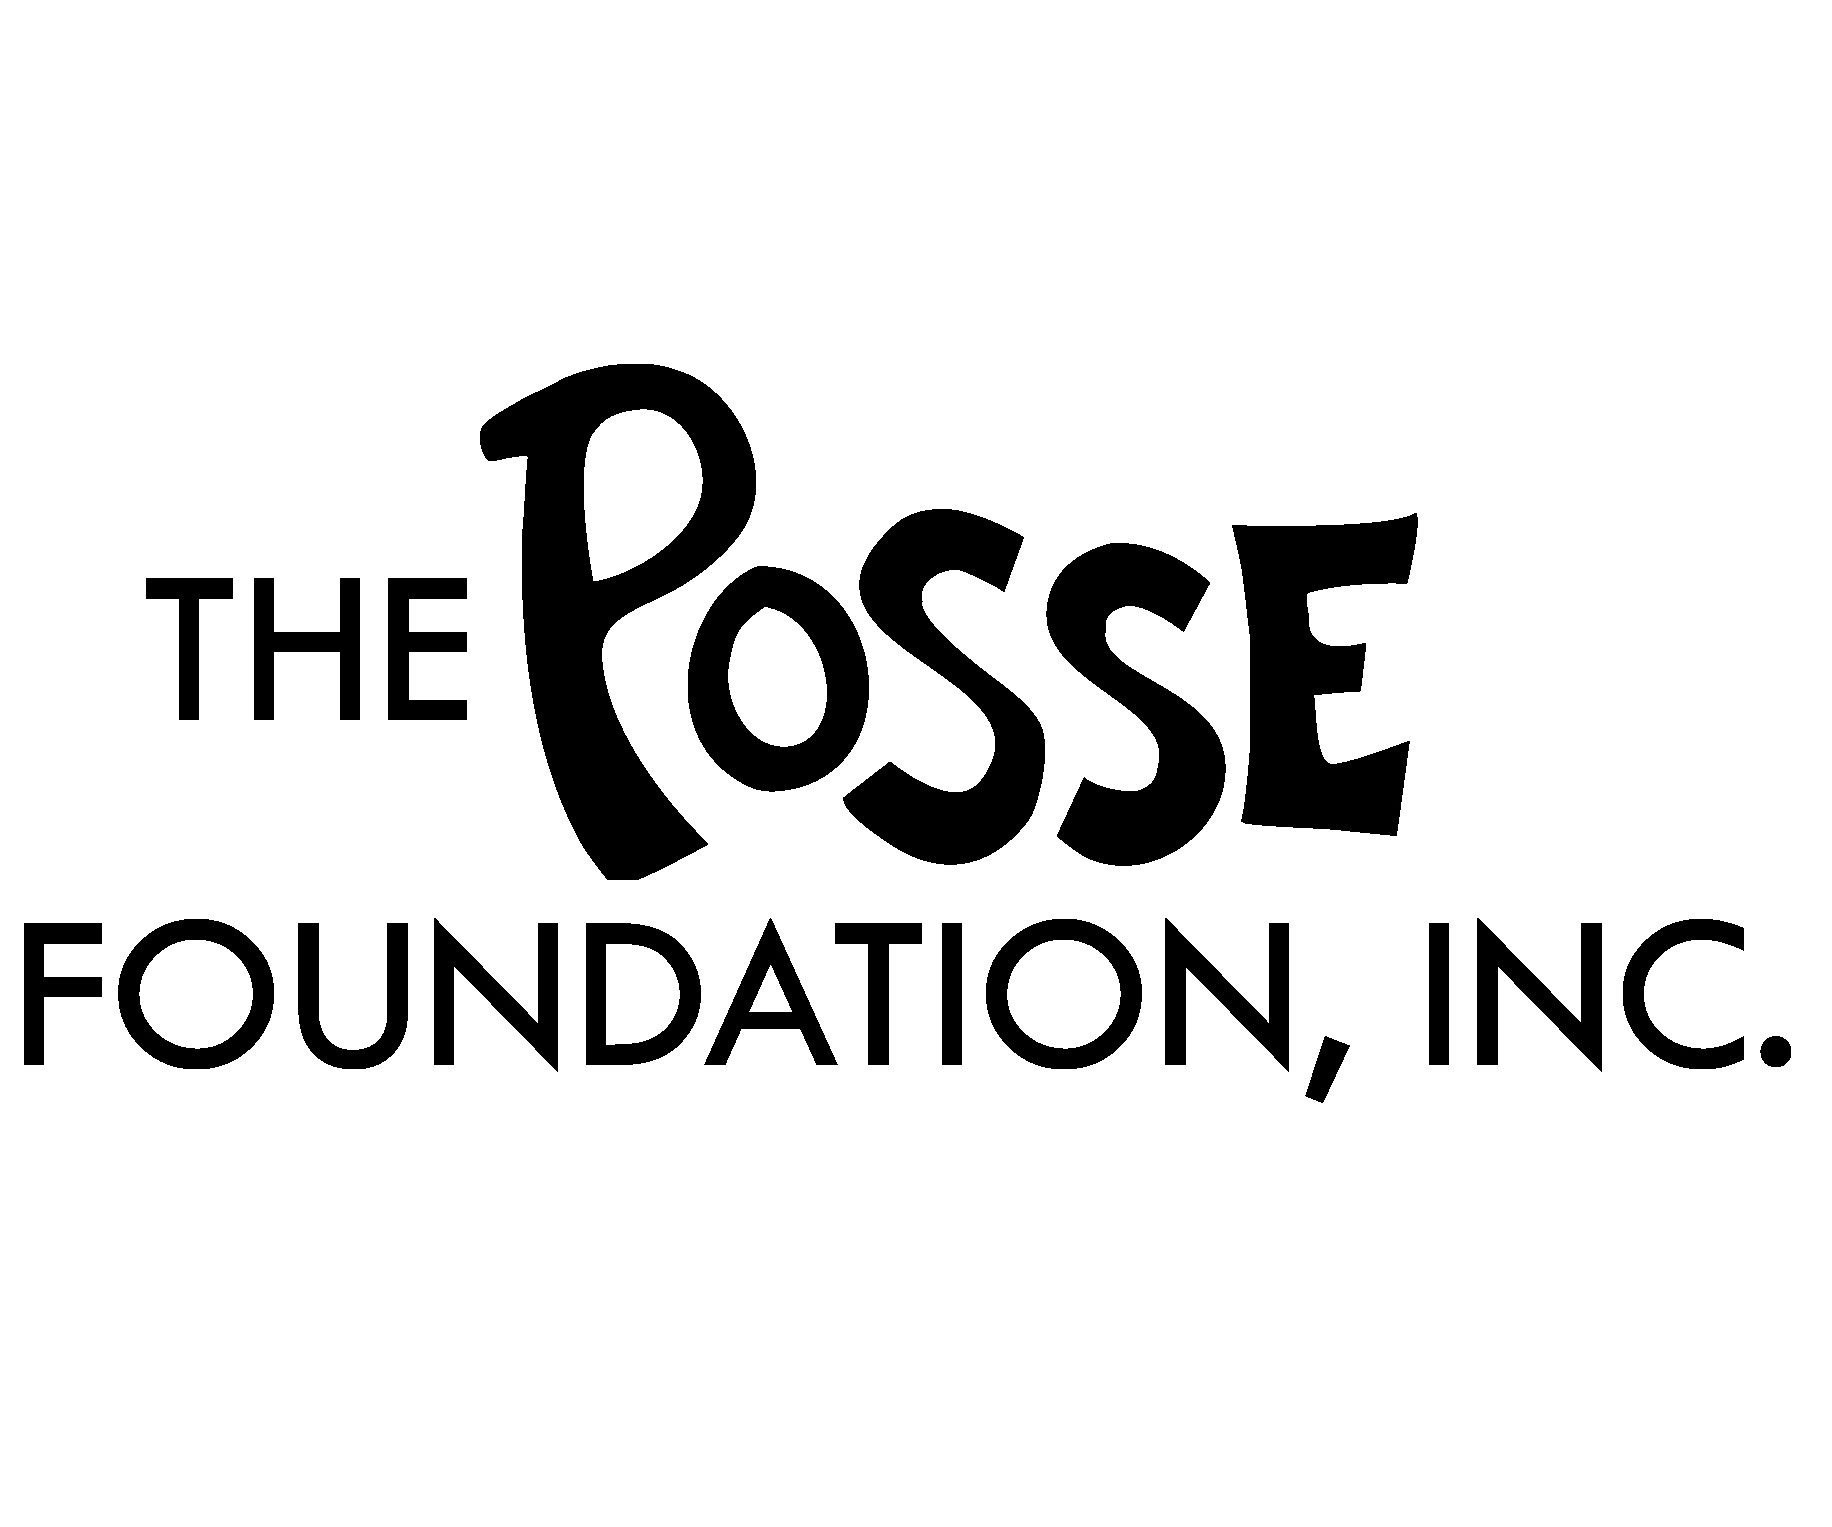 Seven seniors from Gwinnett County Public Schools named Posse Scholars